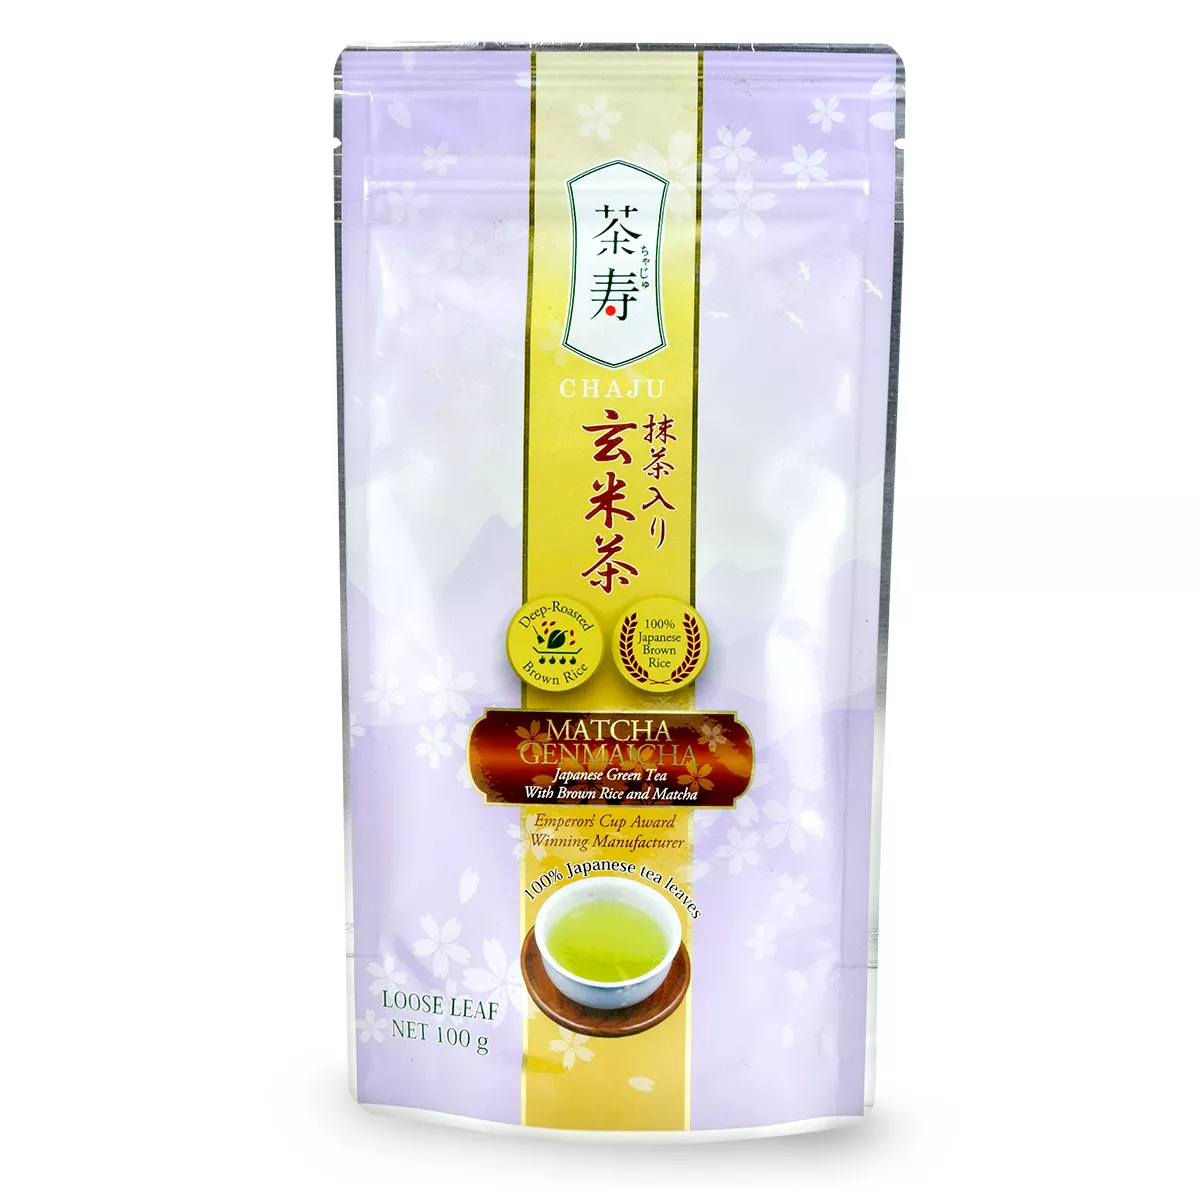 Ceai verde Matcha Genmaicha CHAJU 100g, [],asianfood.ro